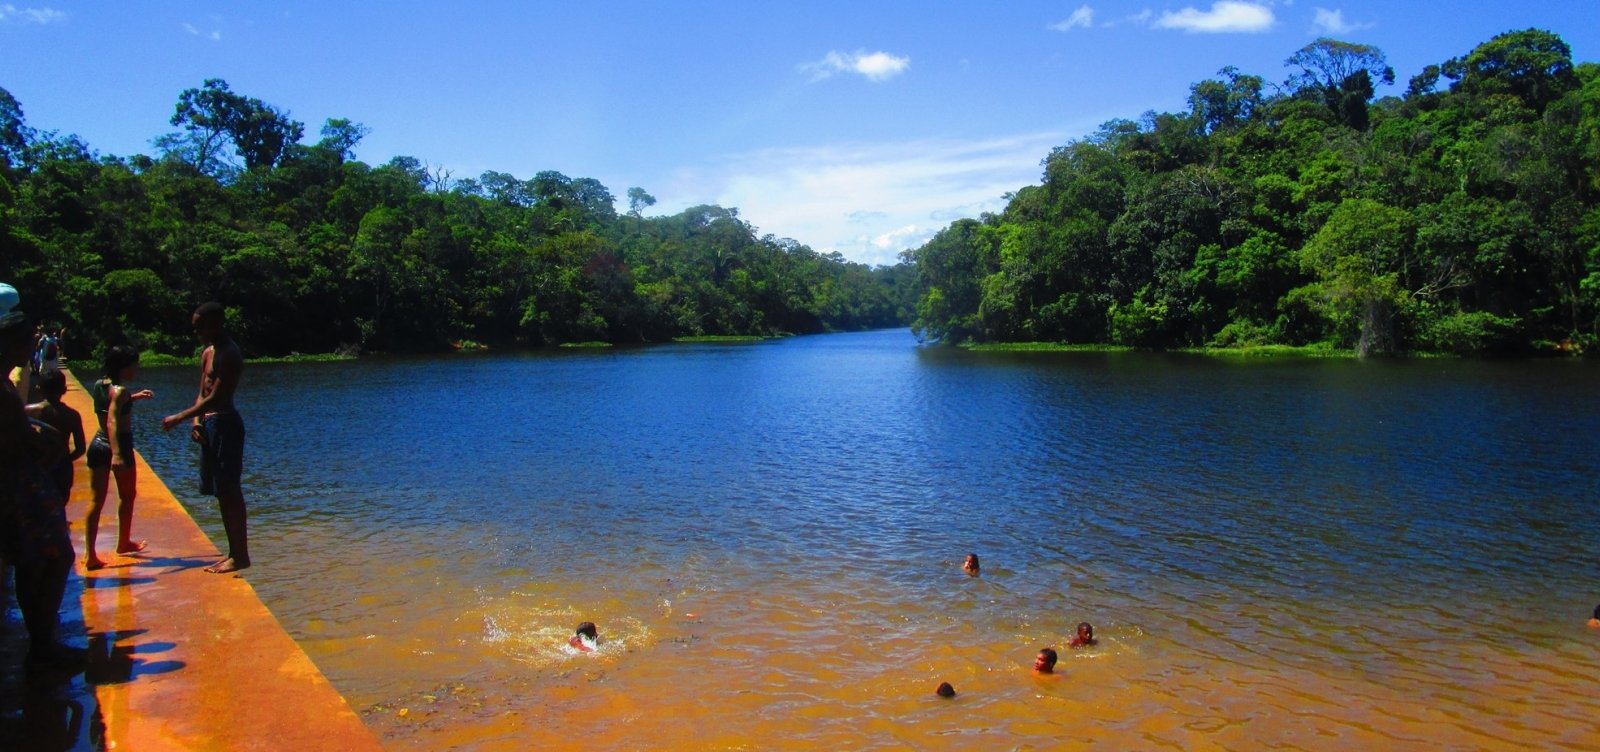 Trilha ecológica explora paraíso no subúrbio de Salvador